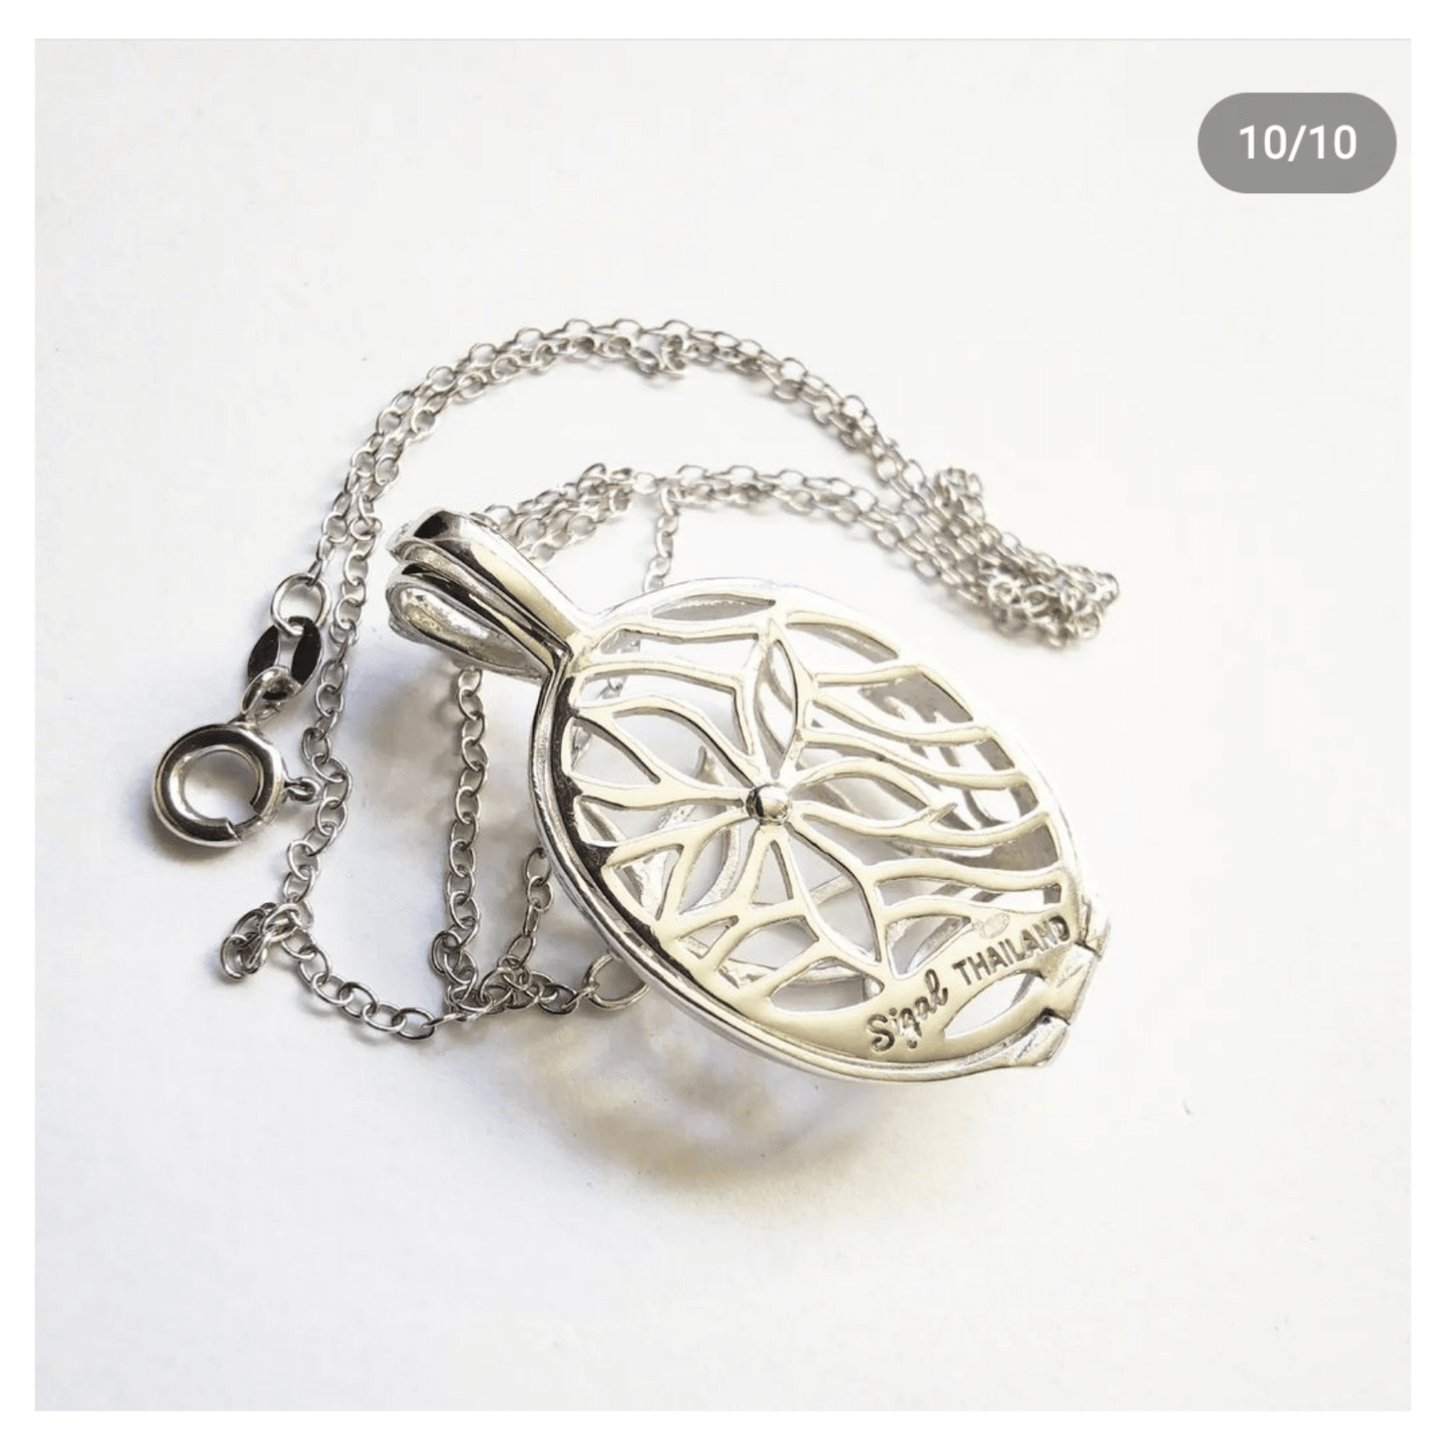 Silver Necklace with Rose Quartz